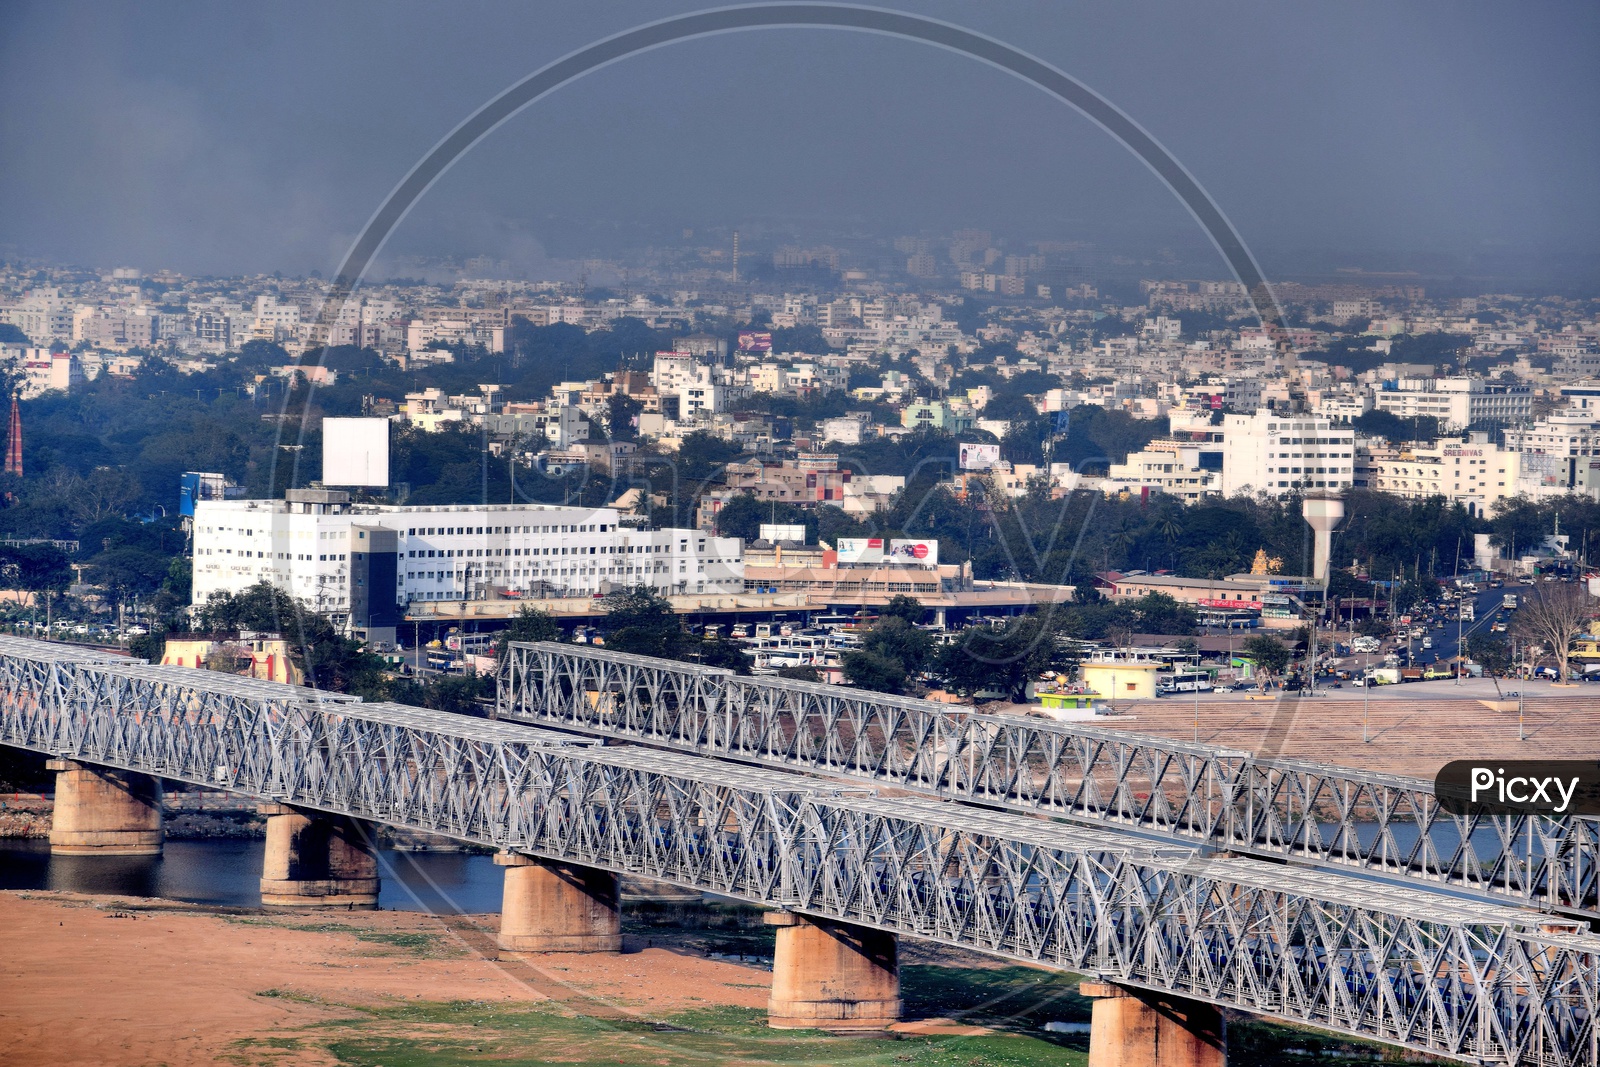 vijayawada pandit nehru bus stand  and railway bridge